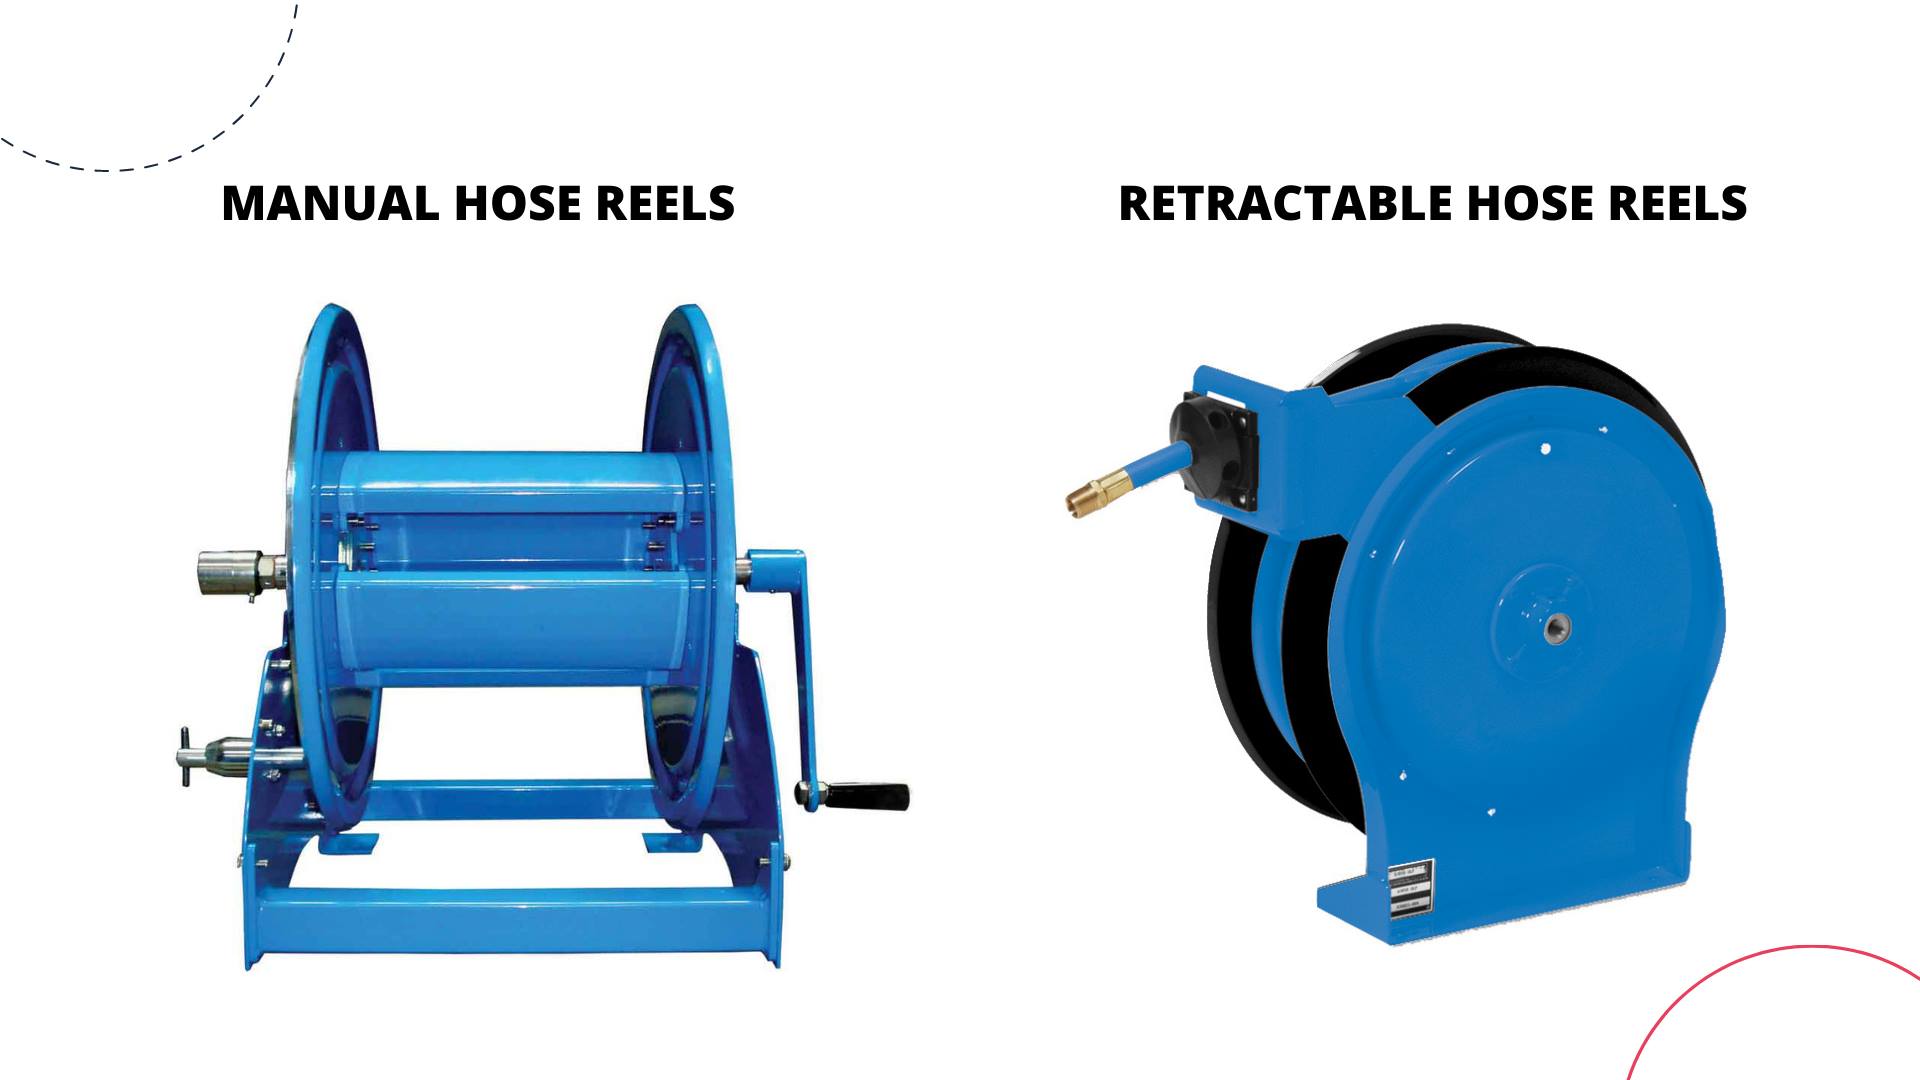 Recoila Hose and Cord Reels - Retractable and Manual Hose Reels